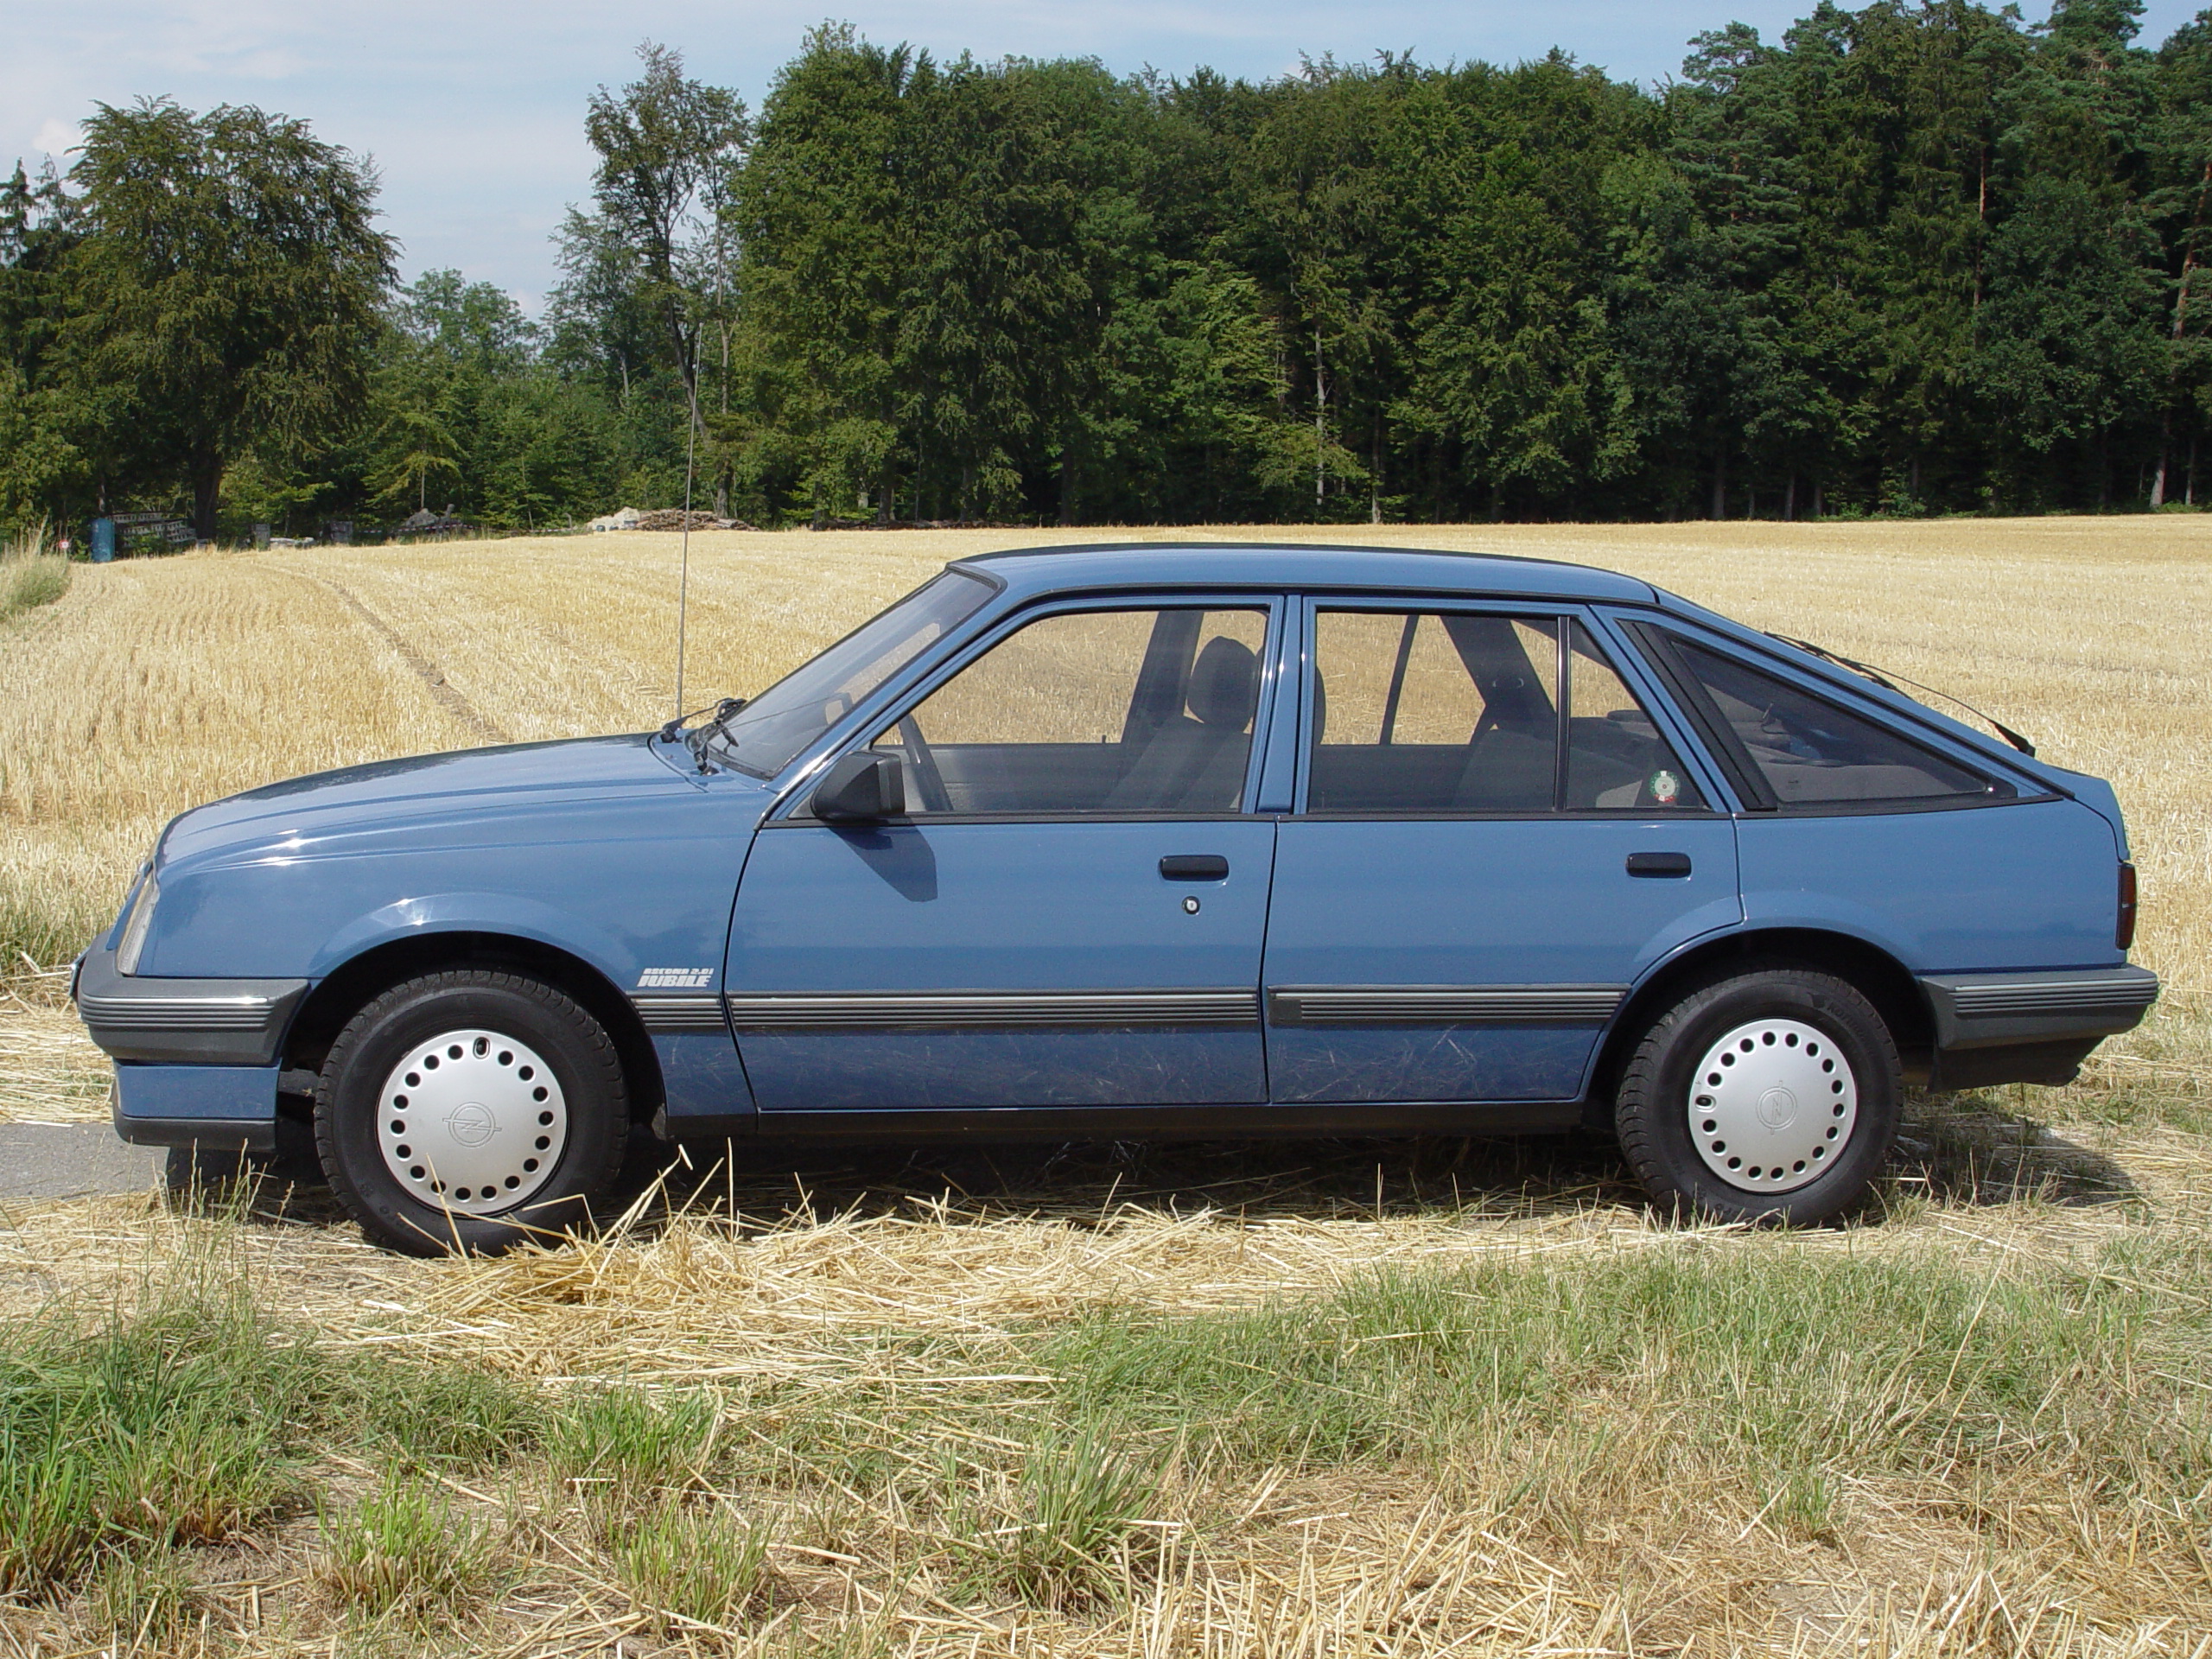 Opel Ascona C 1987 30.7.2006 620 | Flickr - Photo Sharing!